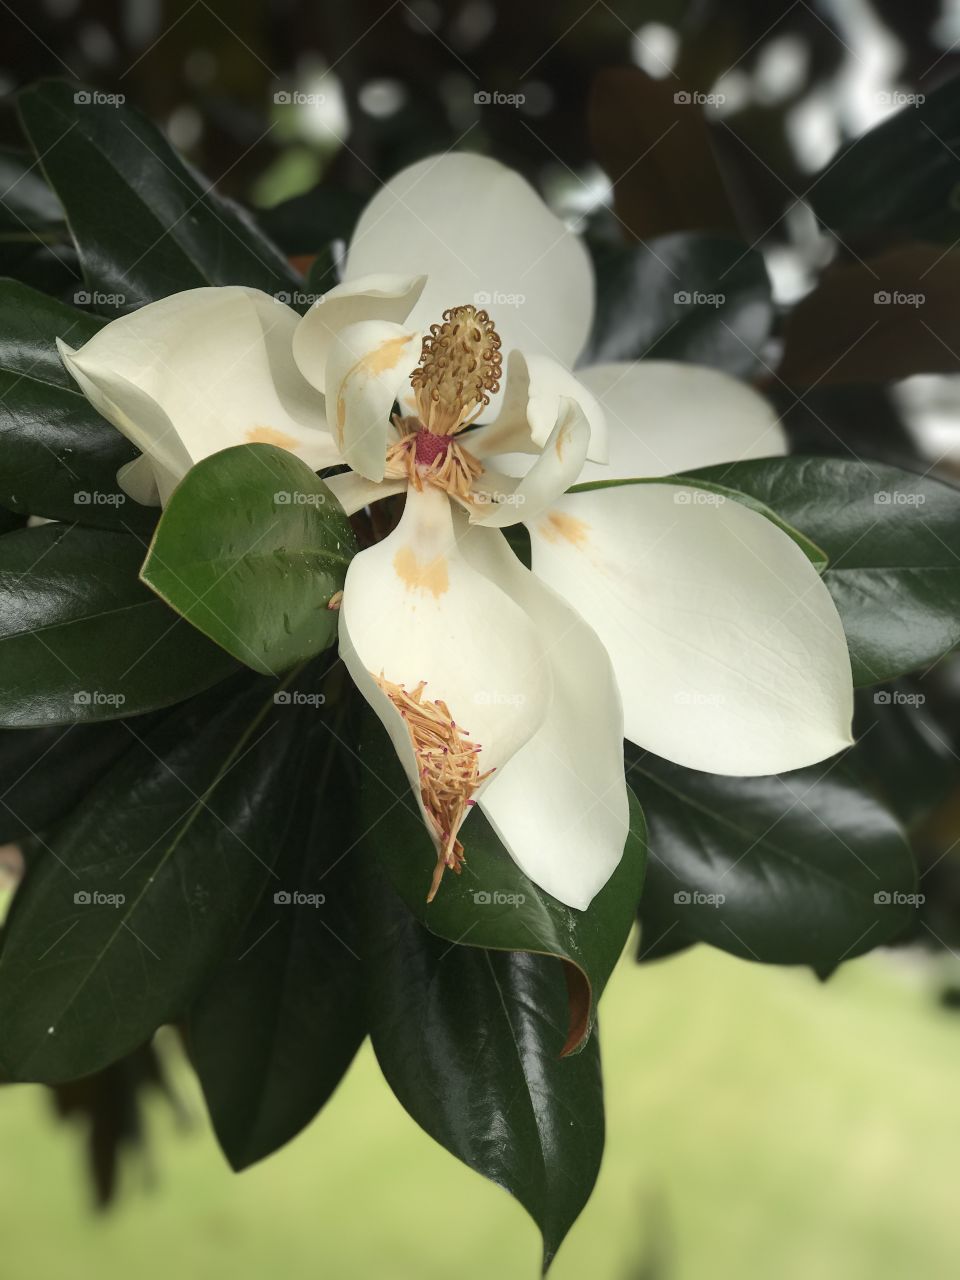 New Orleans magnolia tree on Magazine Street. Taken with my iPhone 7 Plus.